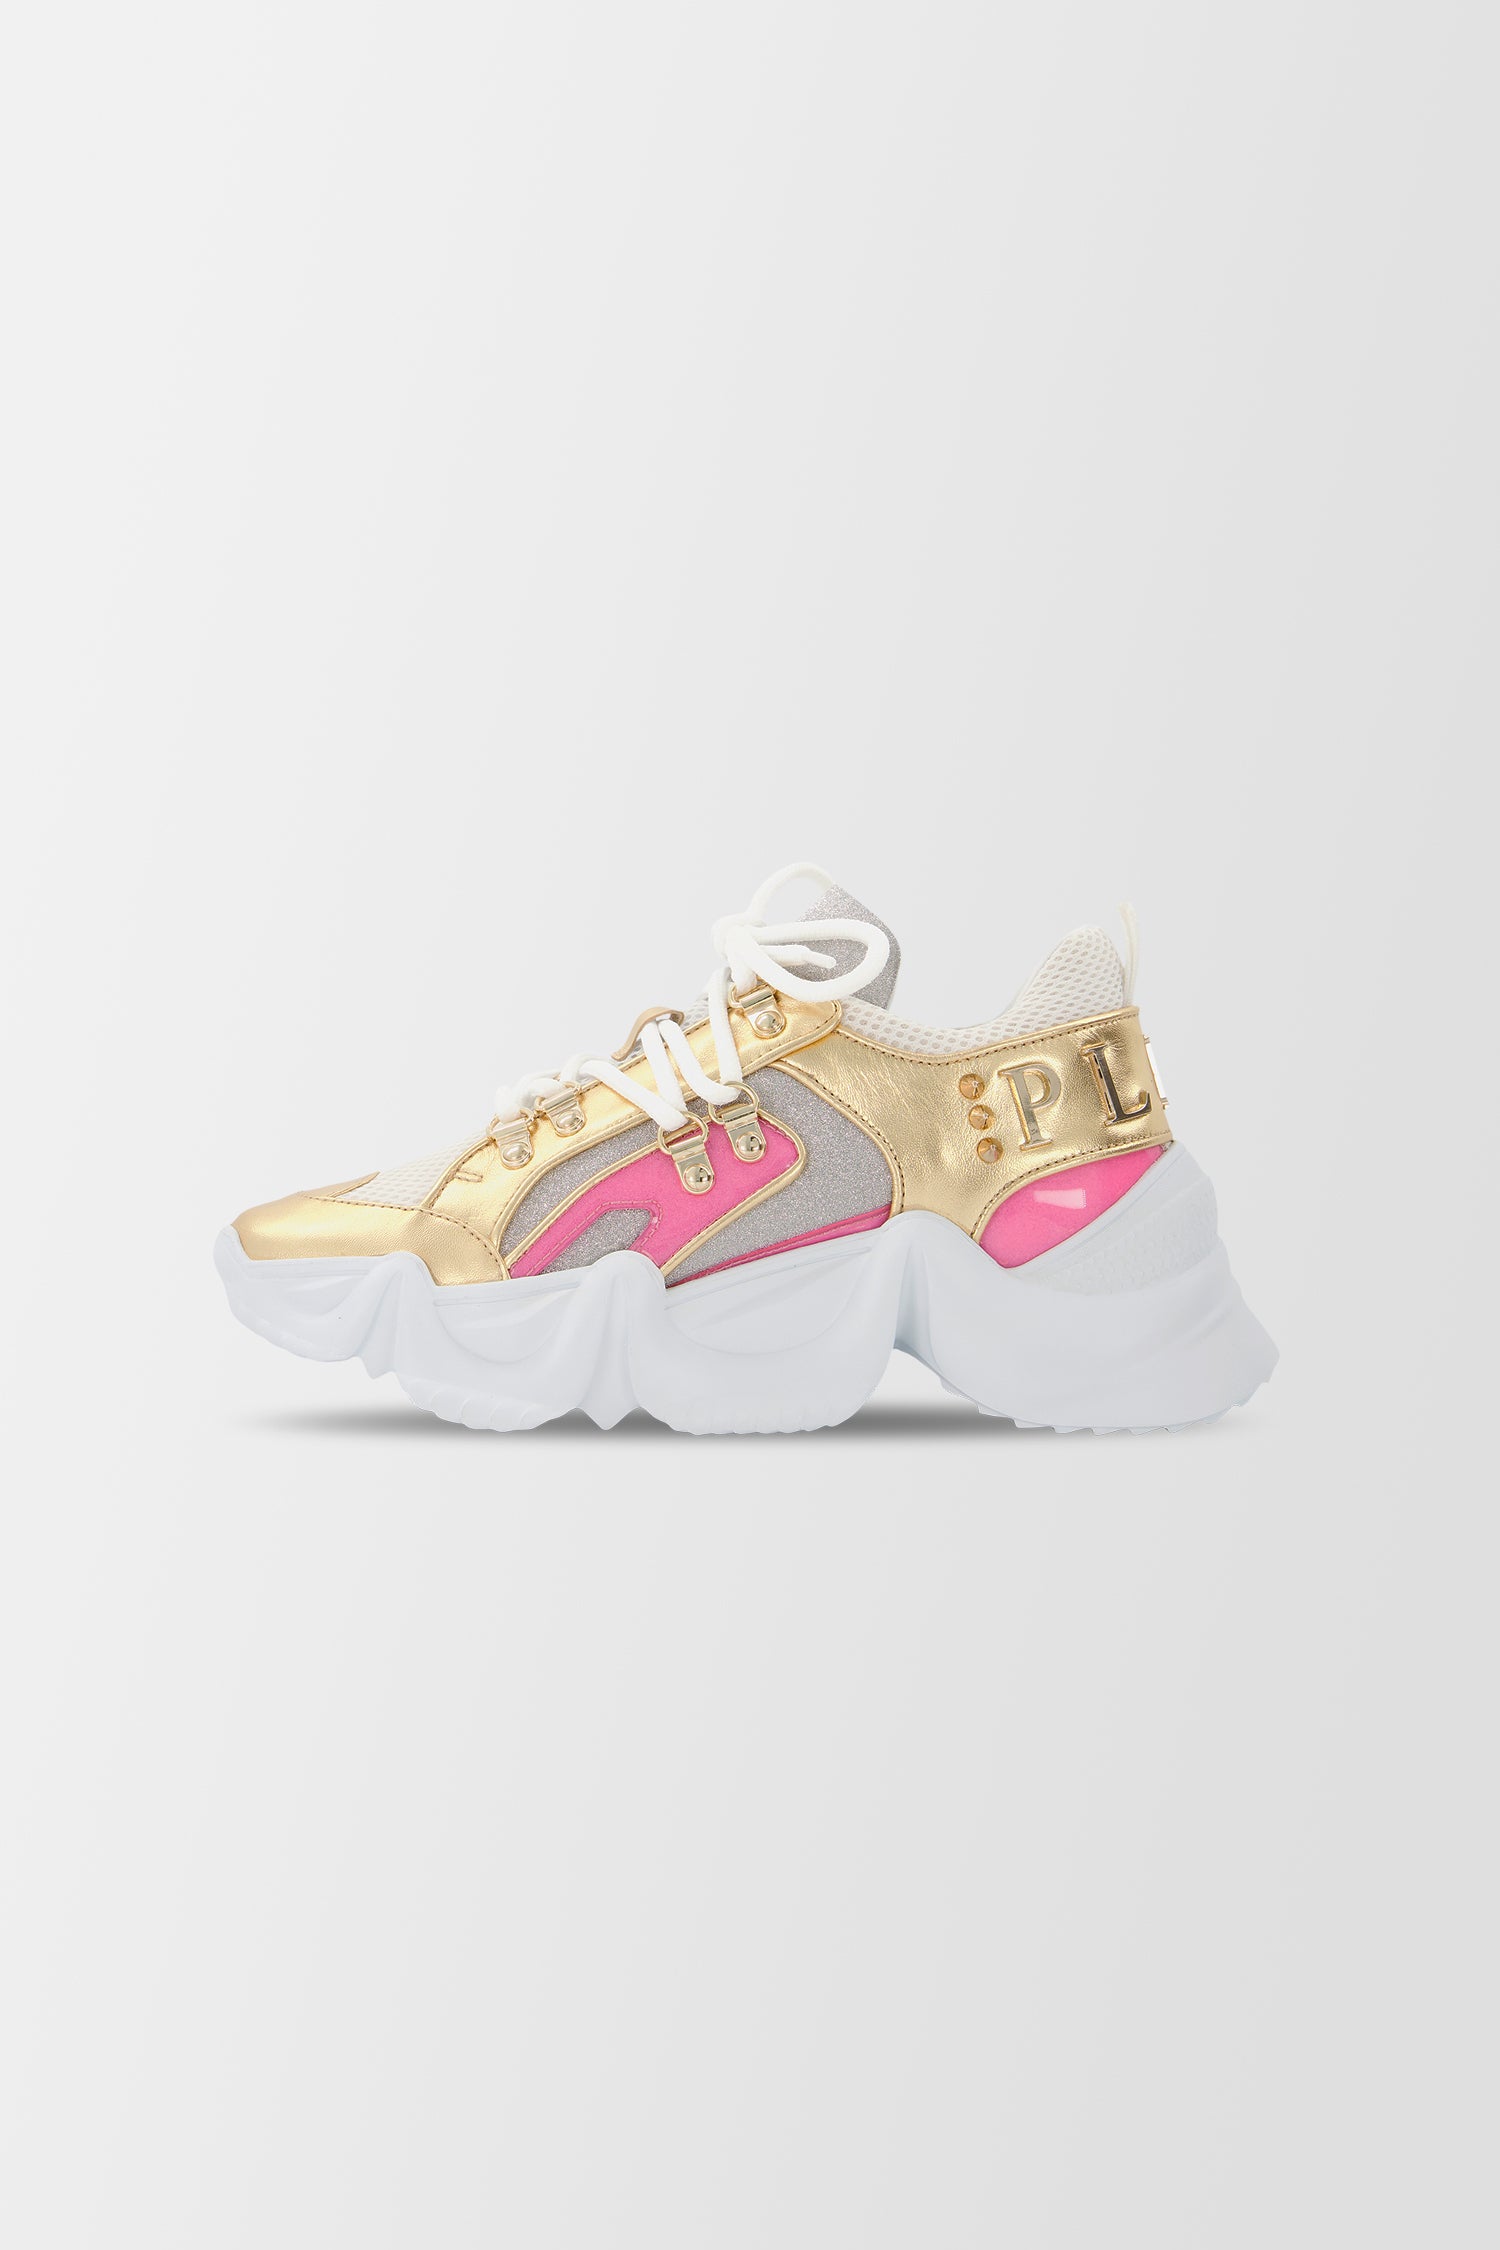 Philipp Plein Gold/Pink Crystal Sneakers